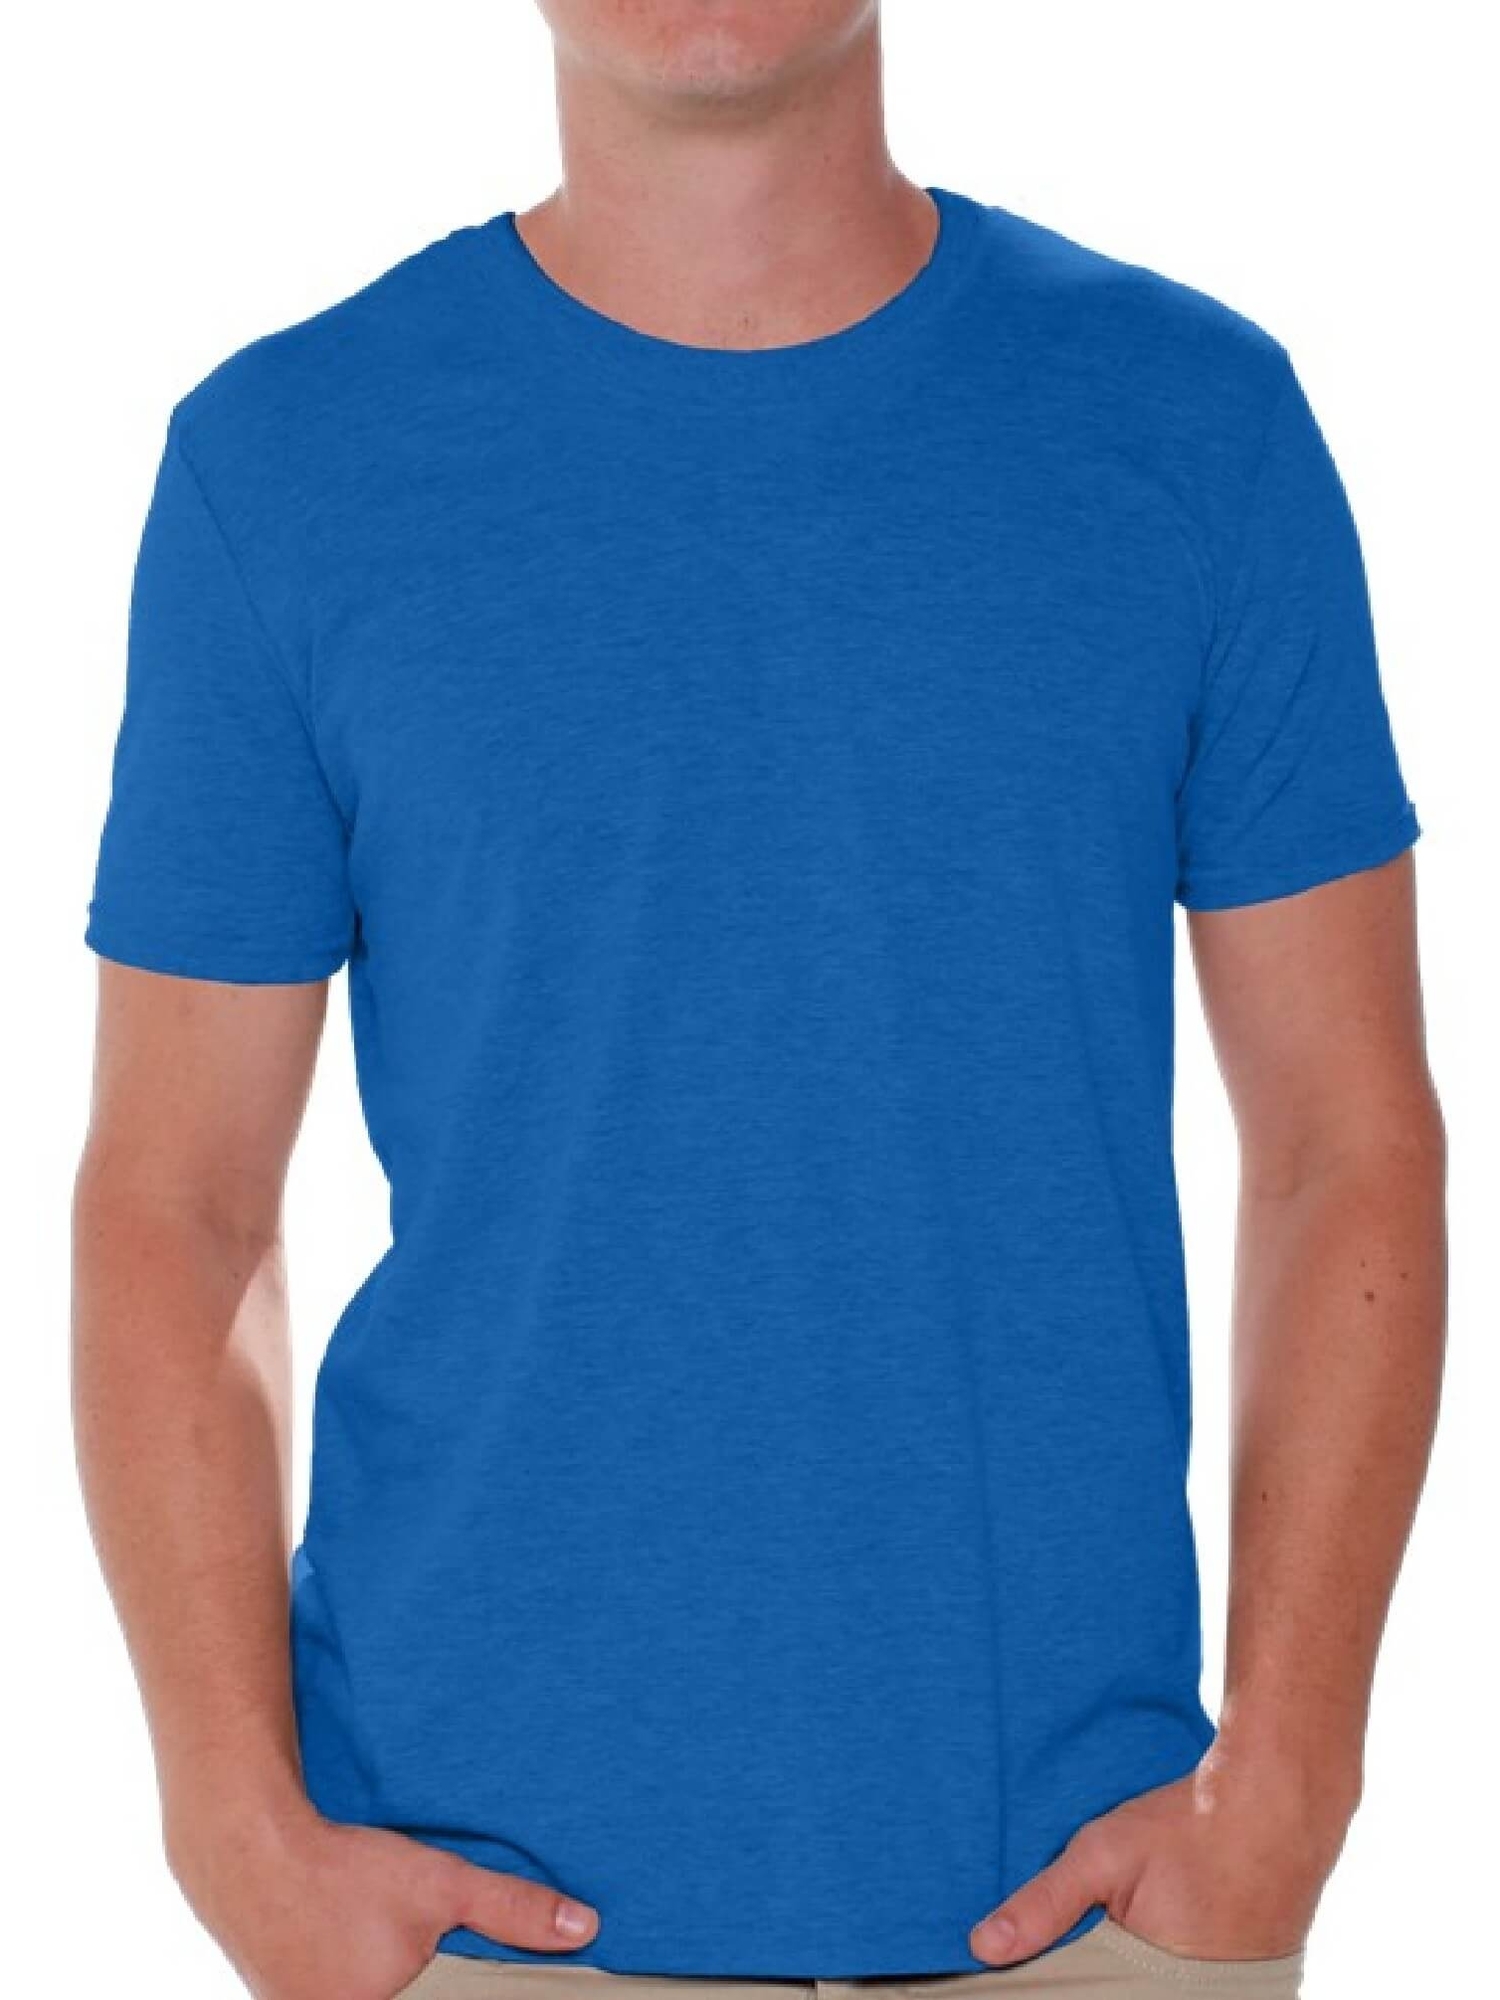 Gildan Shirts for Men Short Sleeve Tshirts Mens Classic Outwear Cotton Men's Shirt Blank Tee Shirts, Size: Medium, Blue